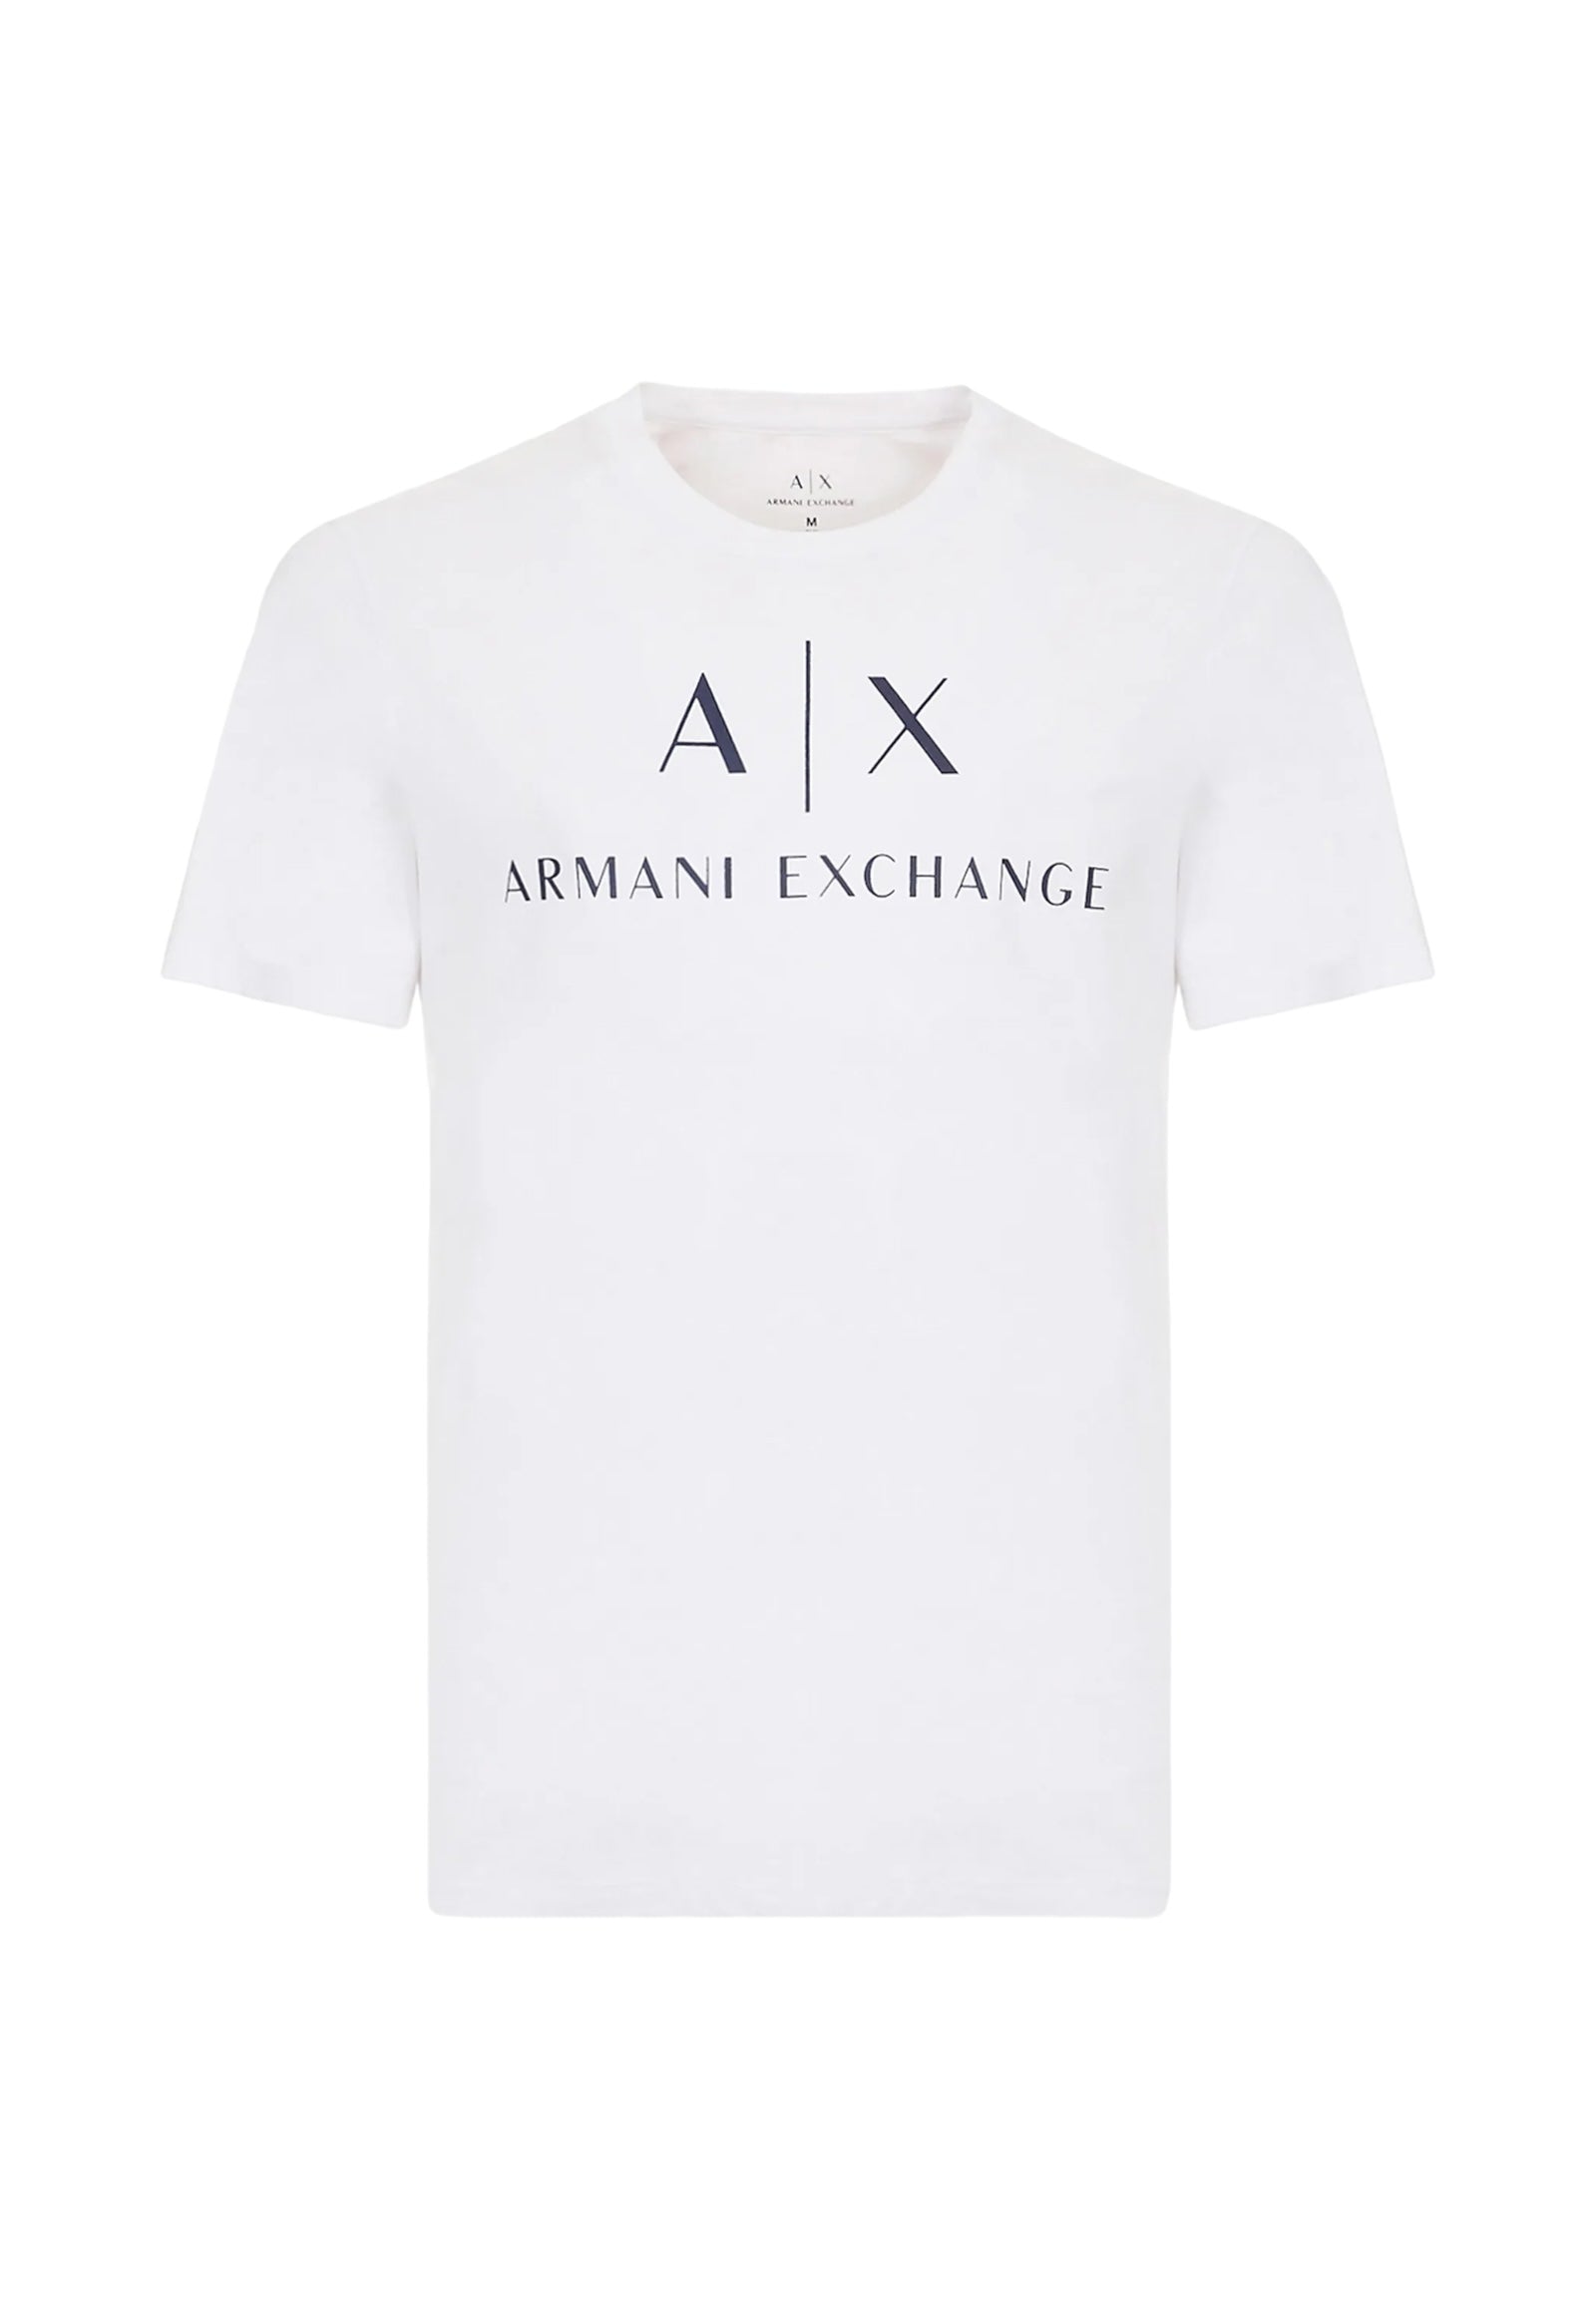 Armani Exchange T-Shirt* 8nztcj White